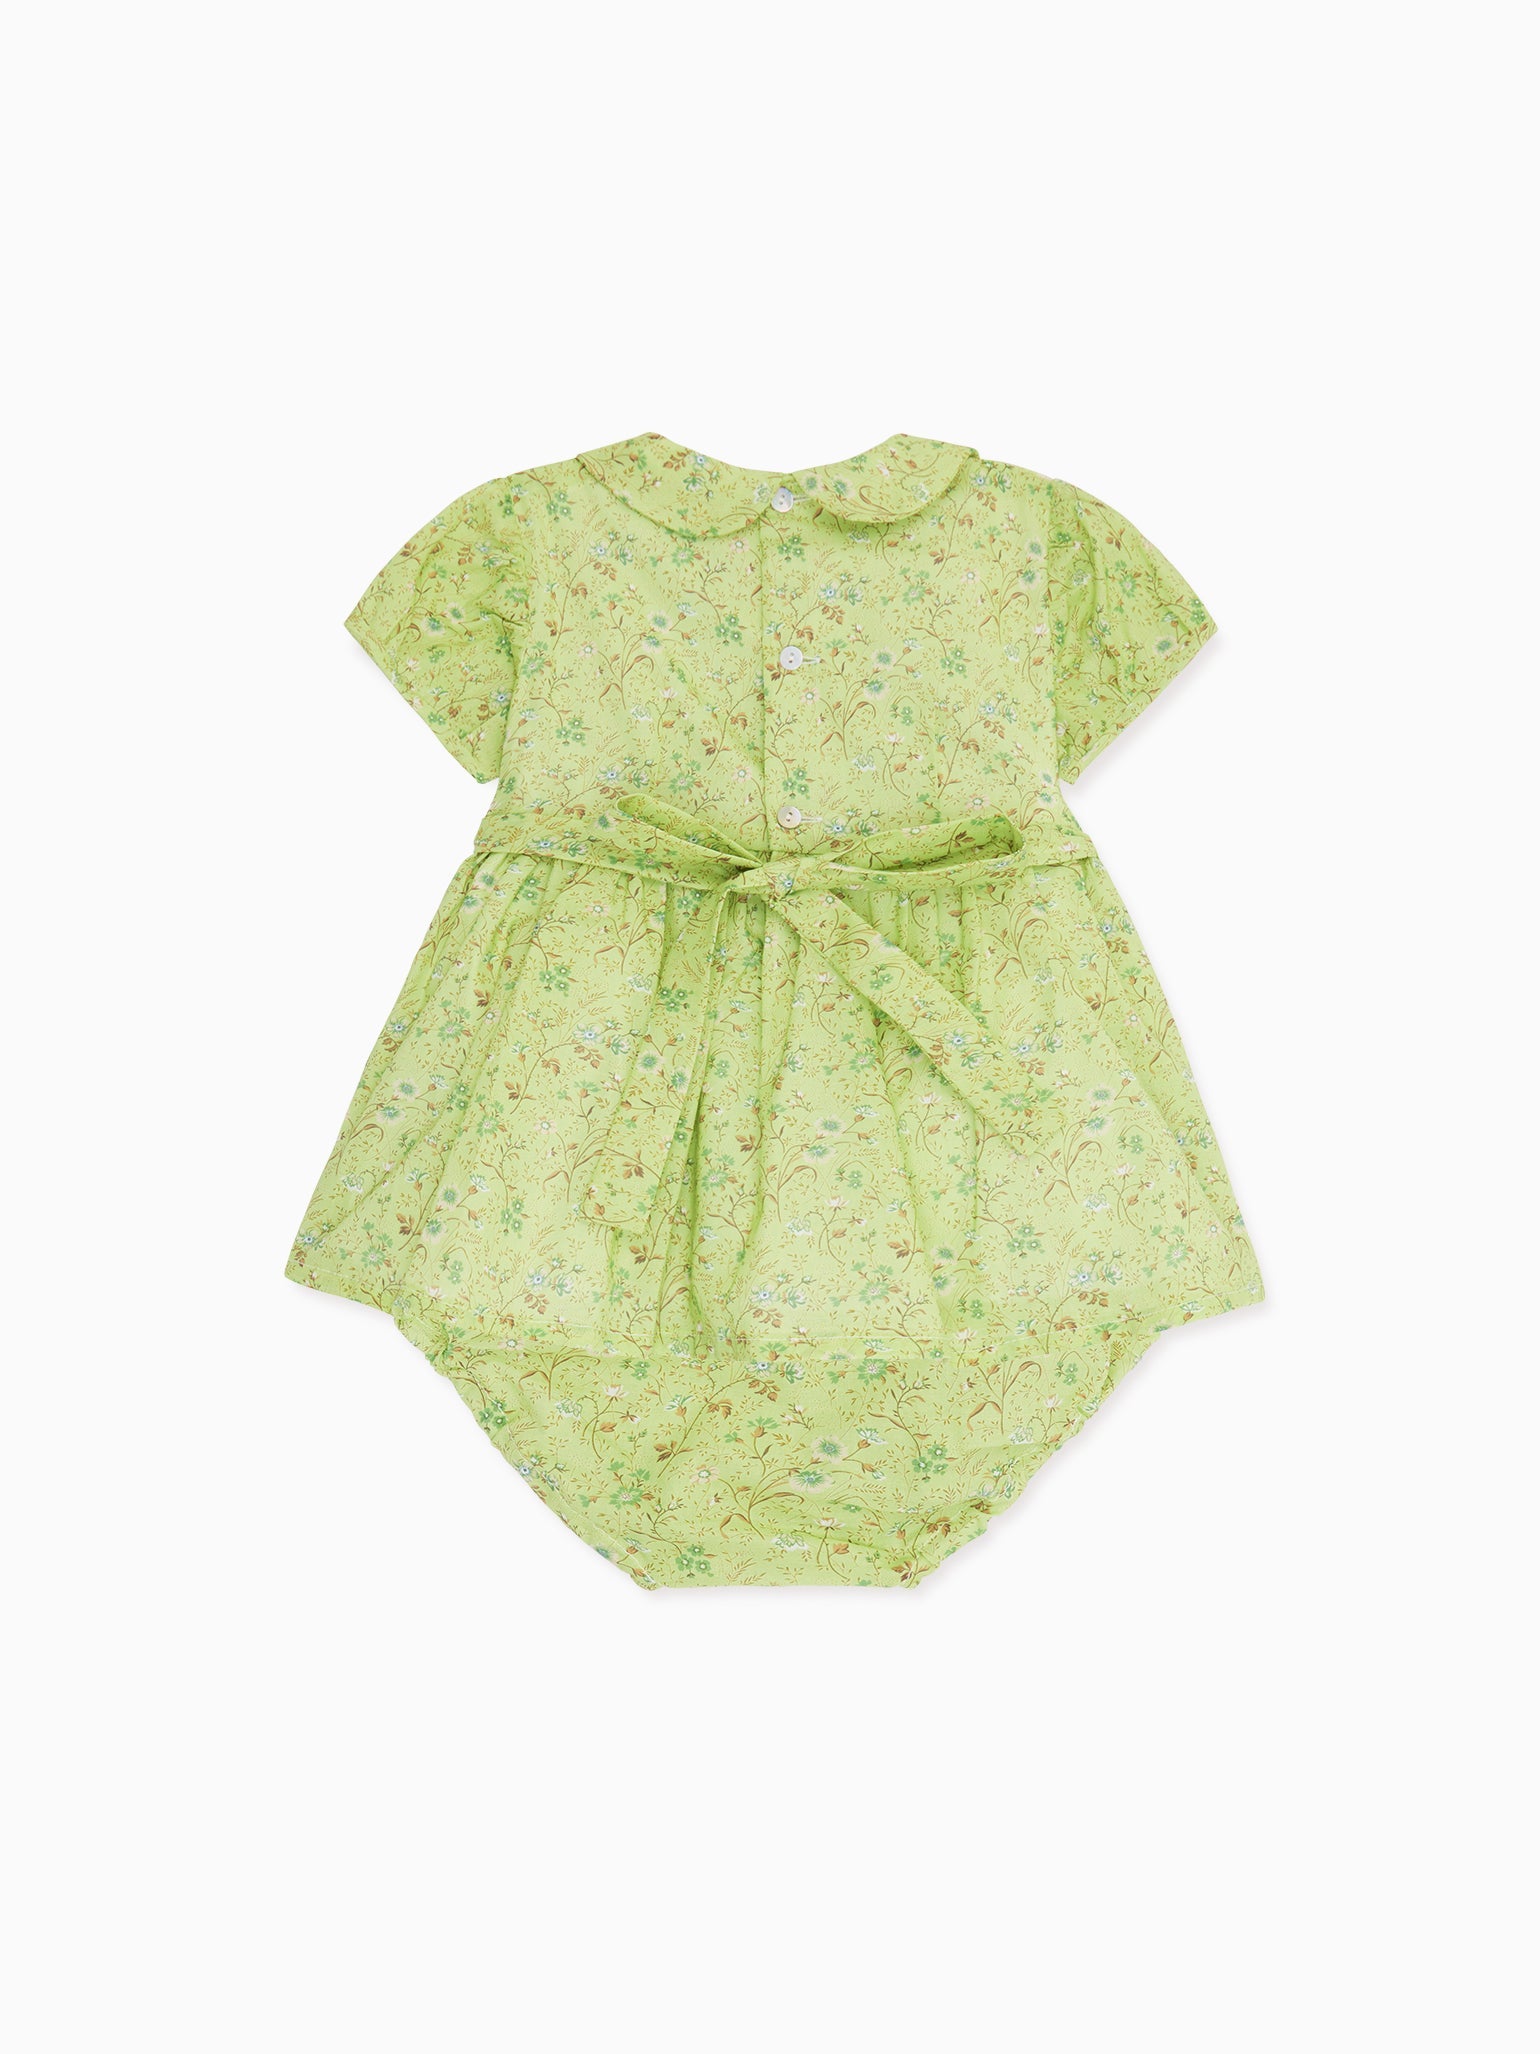 Green Floral Arcadia Baby Girl Hand-Smocked Set